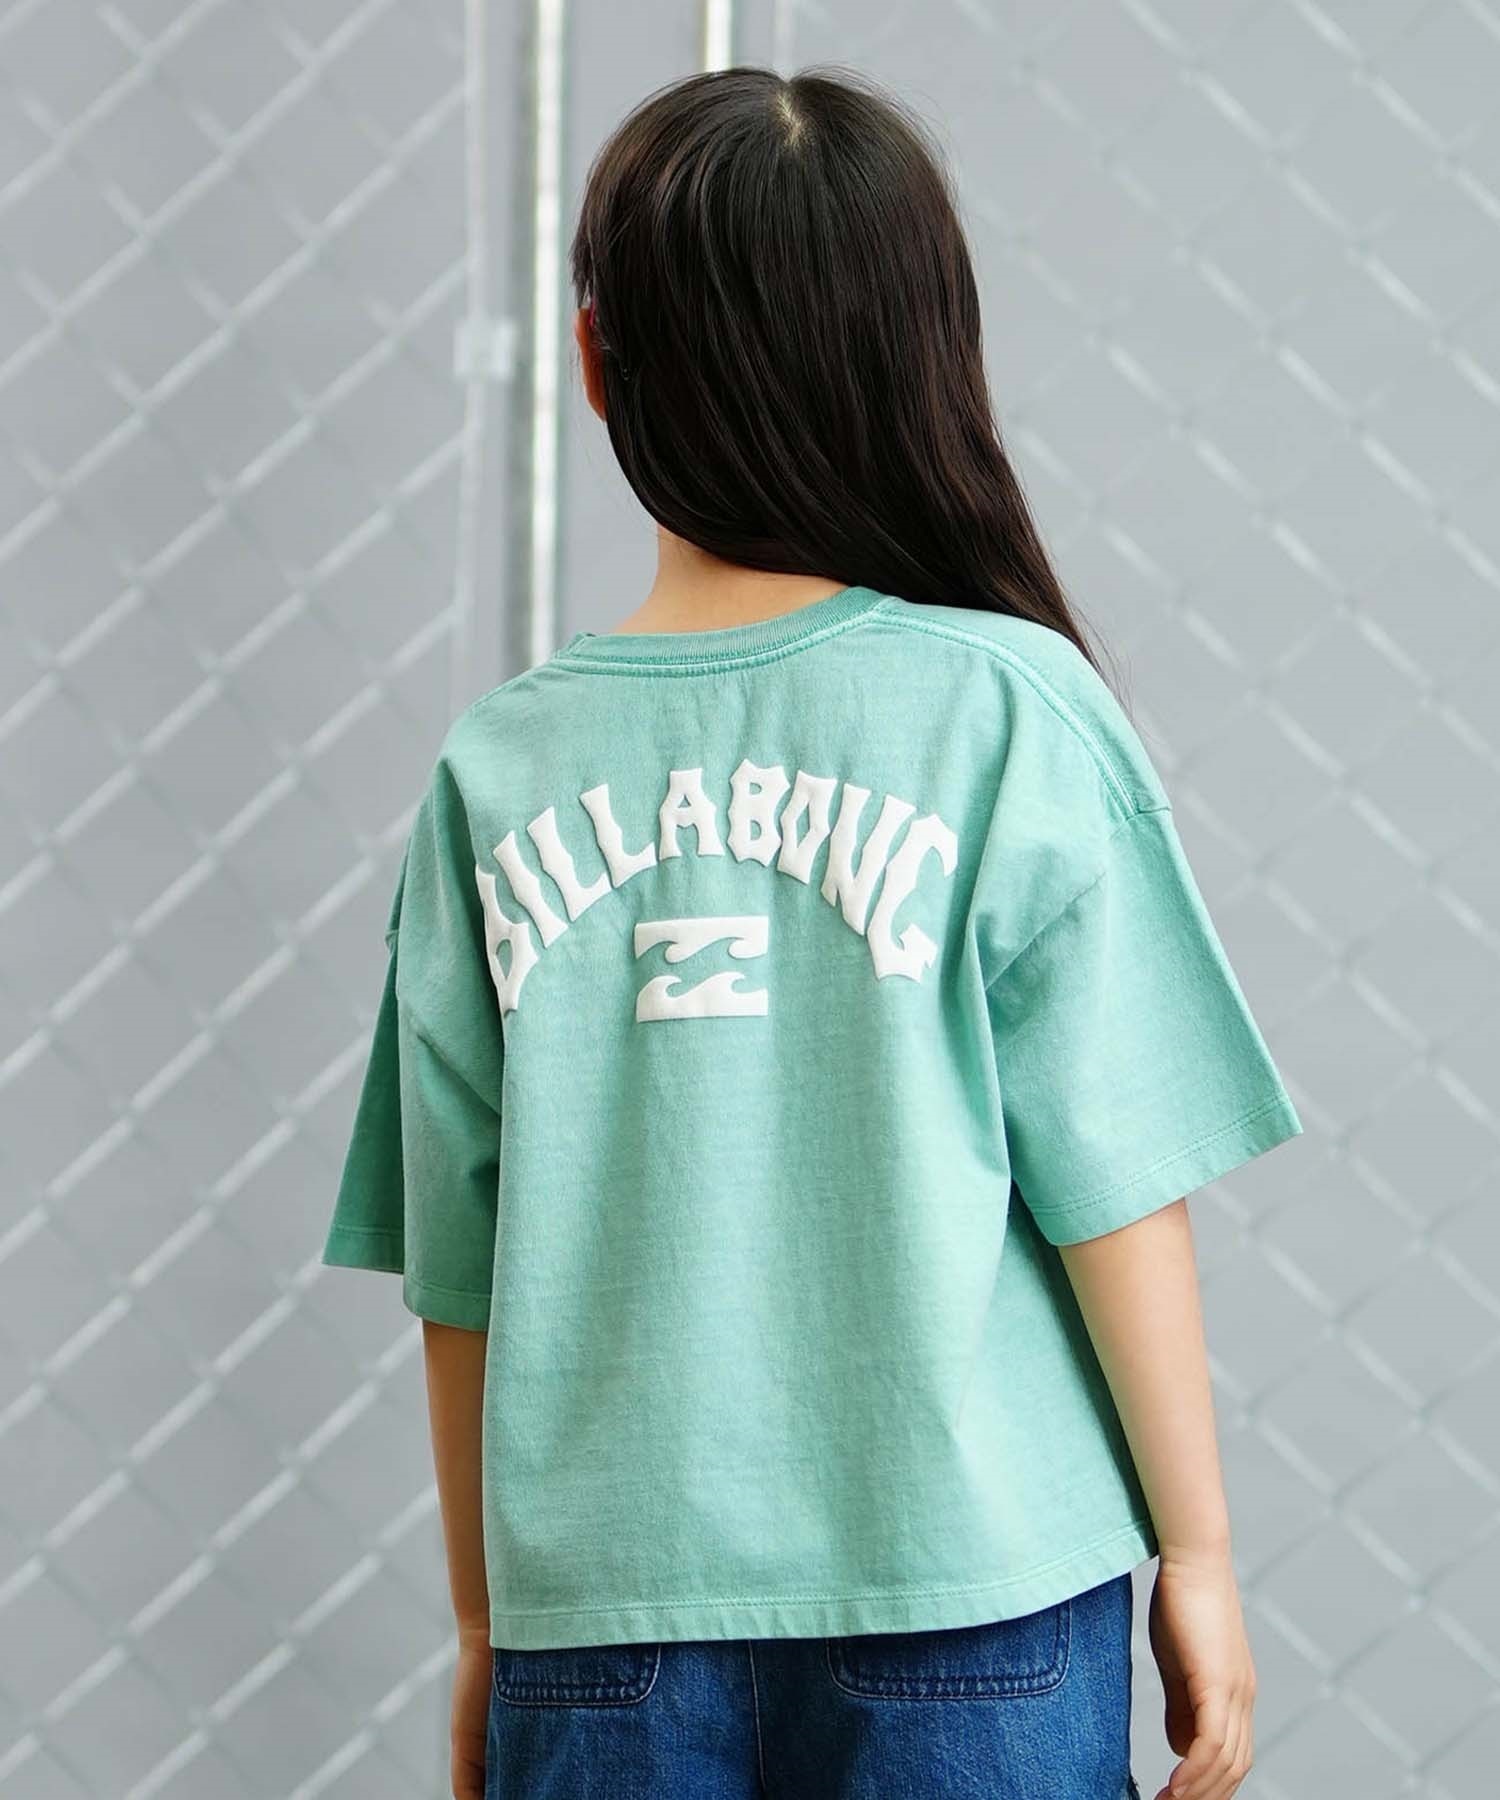 BILLABONG ビラボン ARCH LOGO WIDE LOOSE CROPED TEE キッズ 半袖 Tシャツ 親子コーデ BE015-250(SCS-130cm)